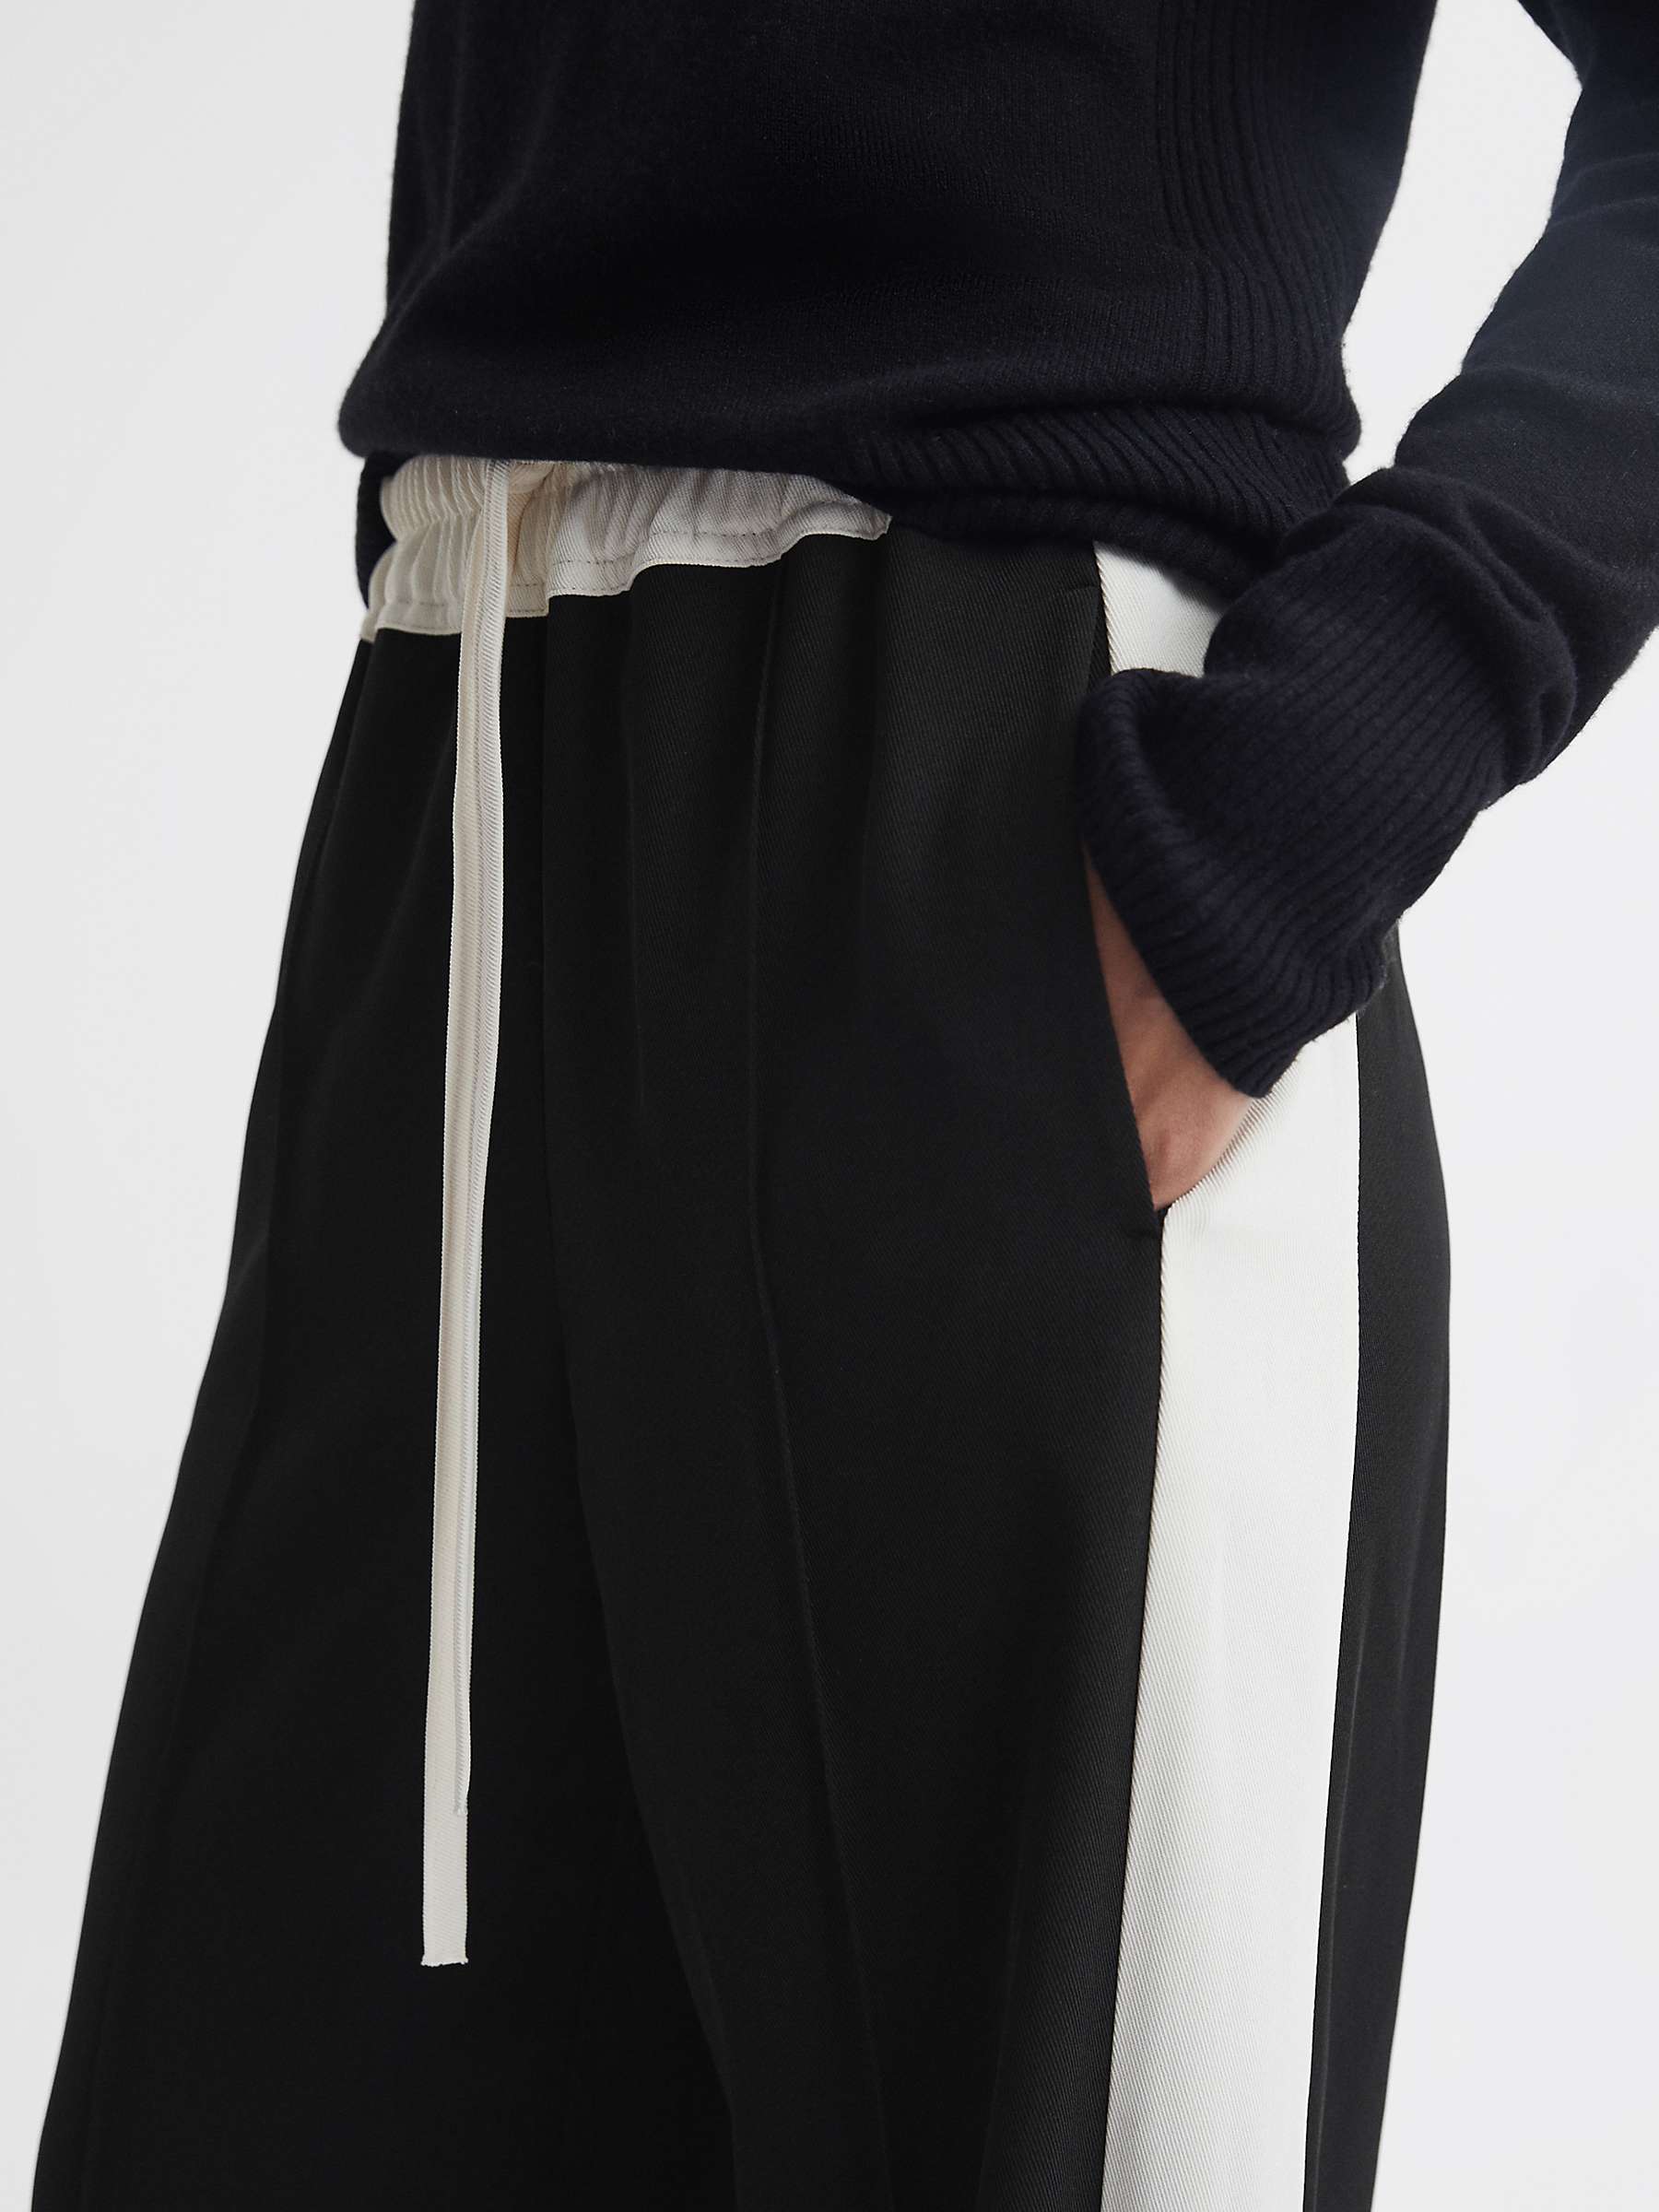 Buy Reiss May Stripe Wide Leg Trousers, Black Online at johnlewis.com